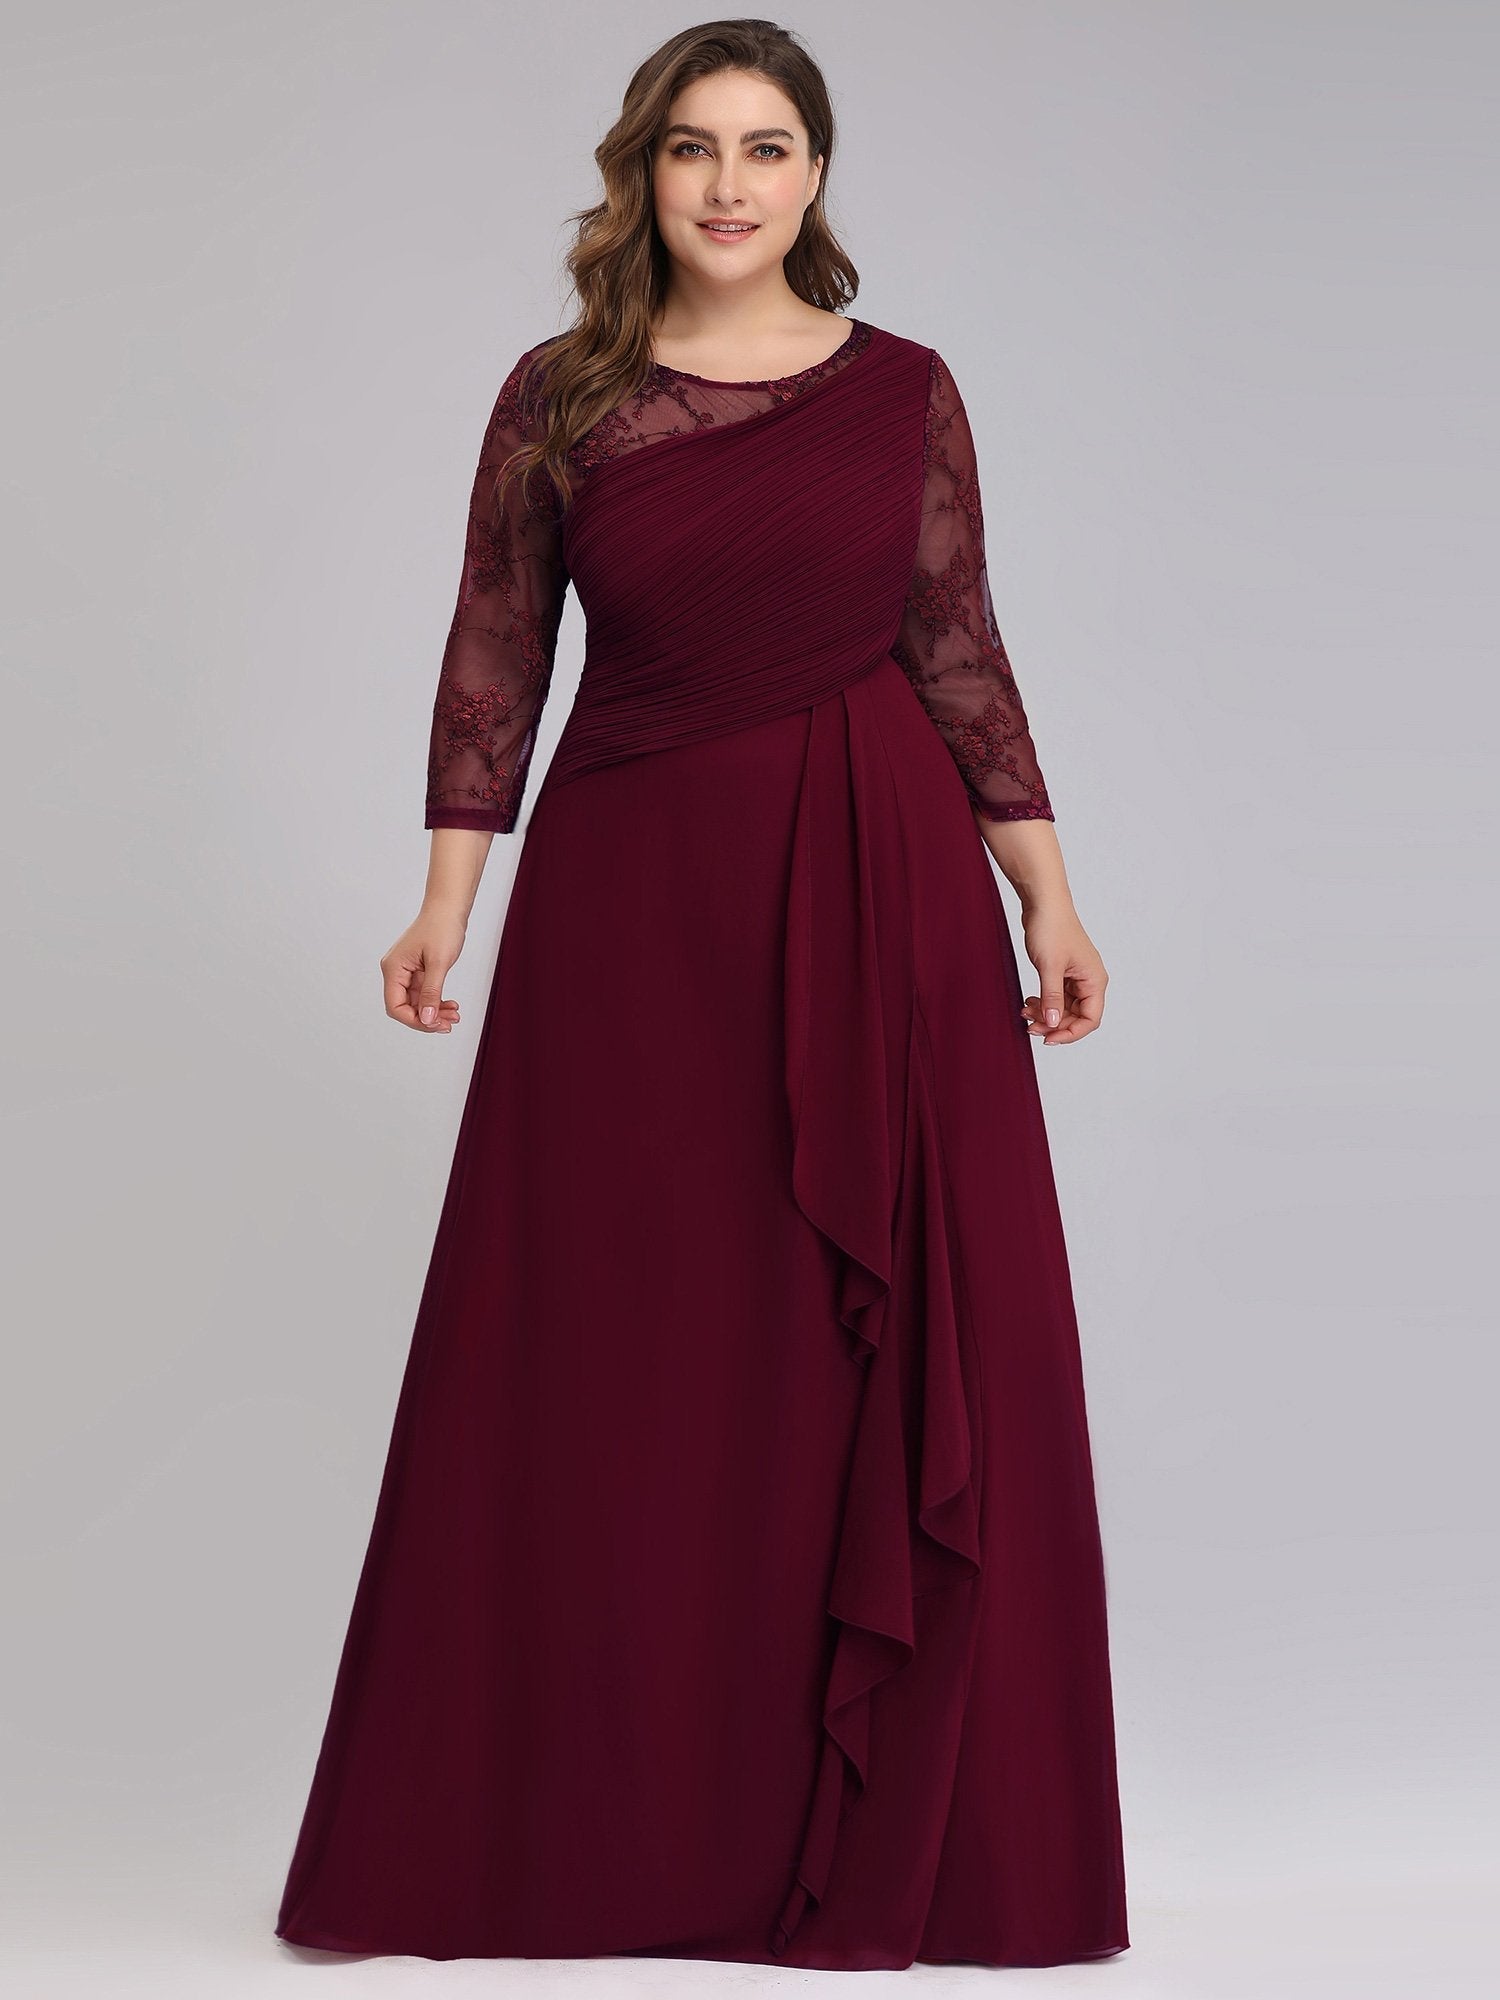 Exquisite Long Sleeve Women's Evening Gown